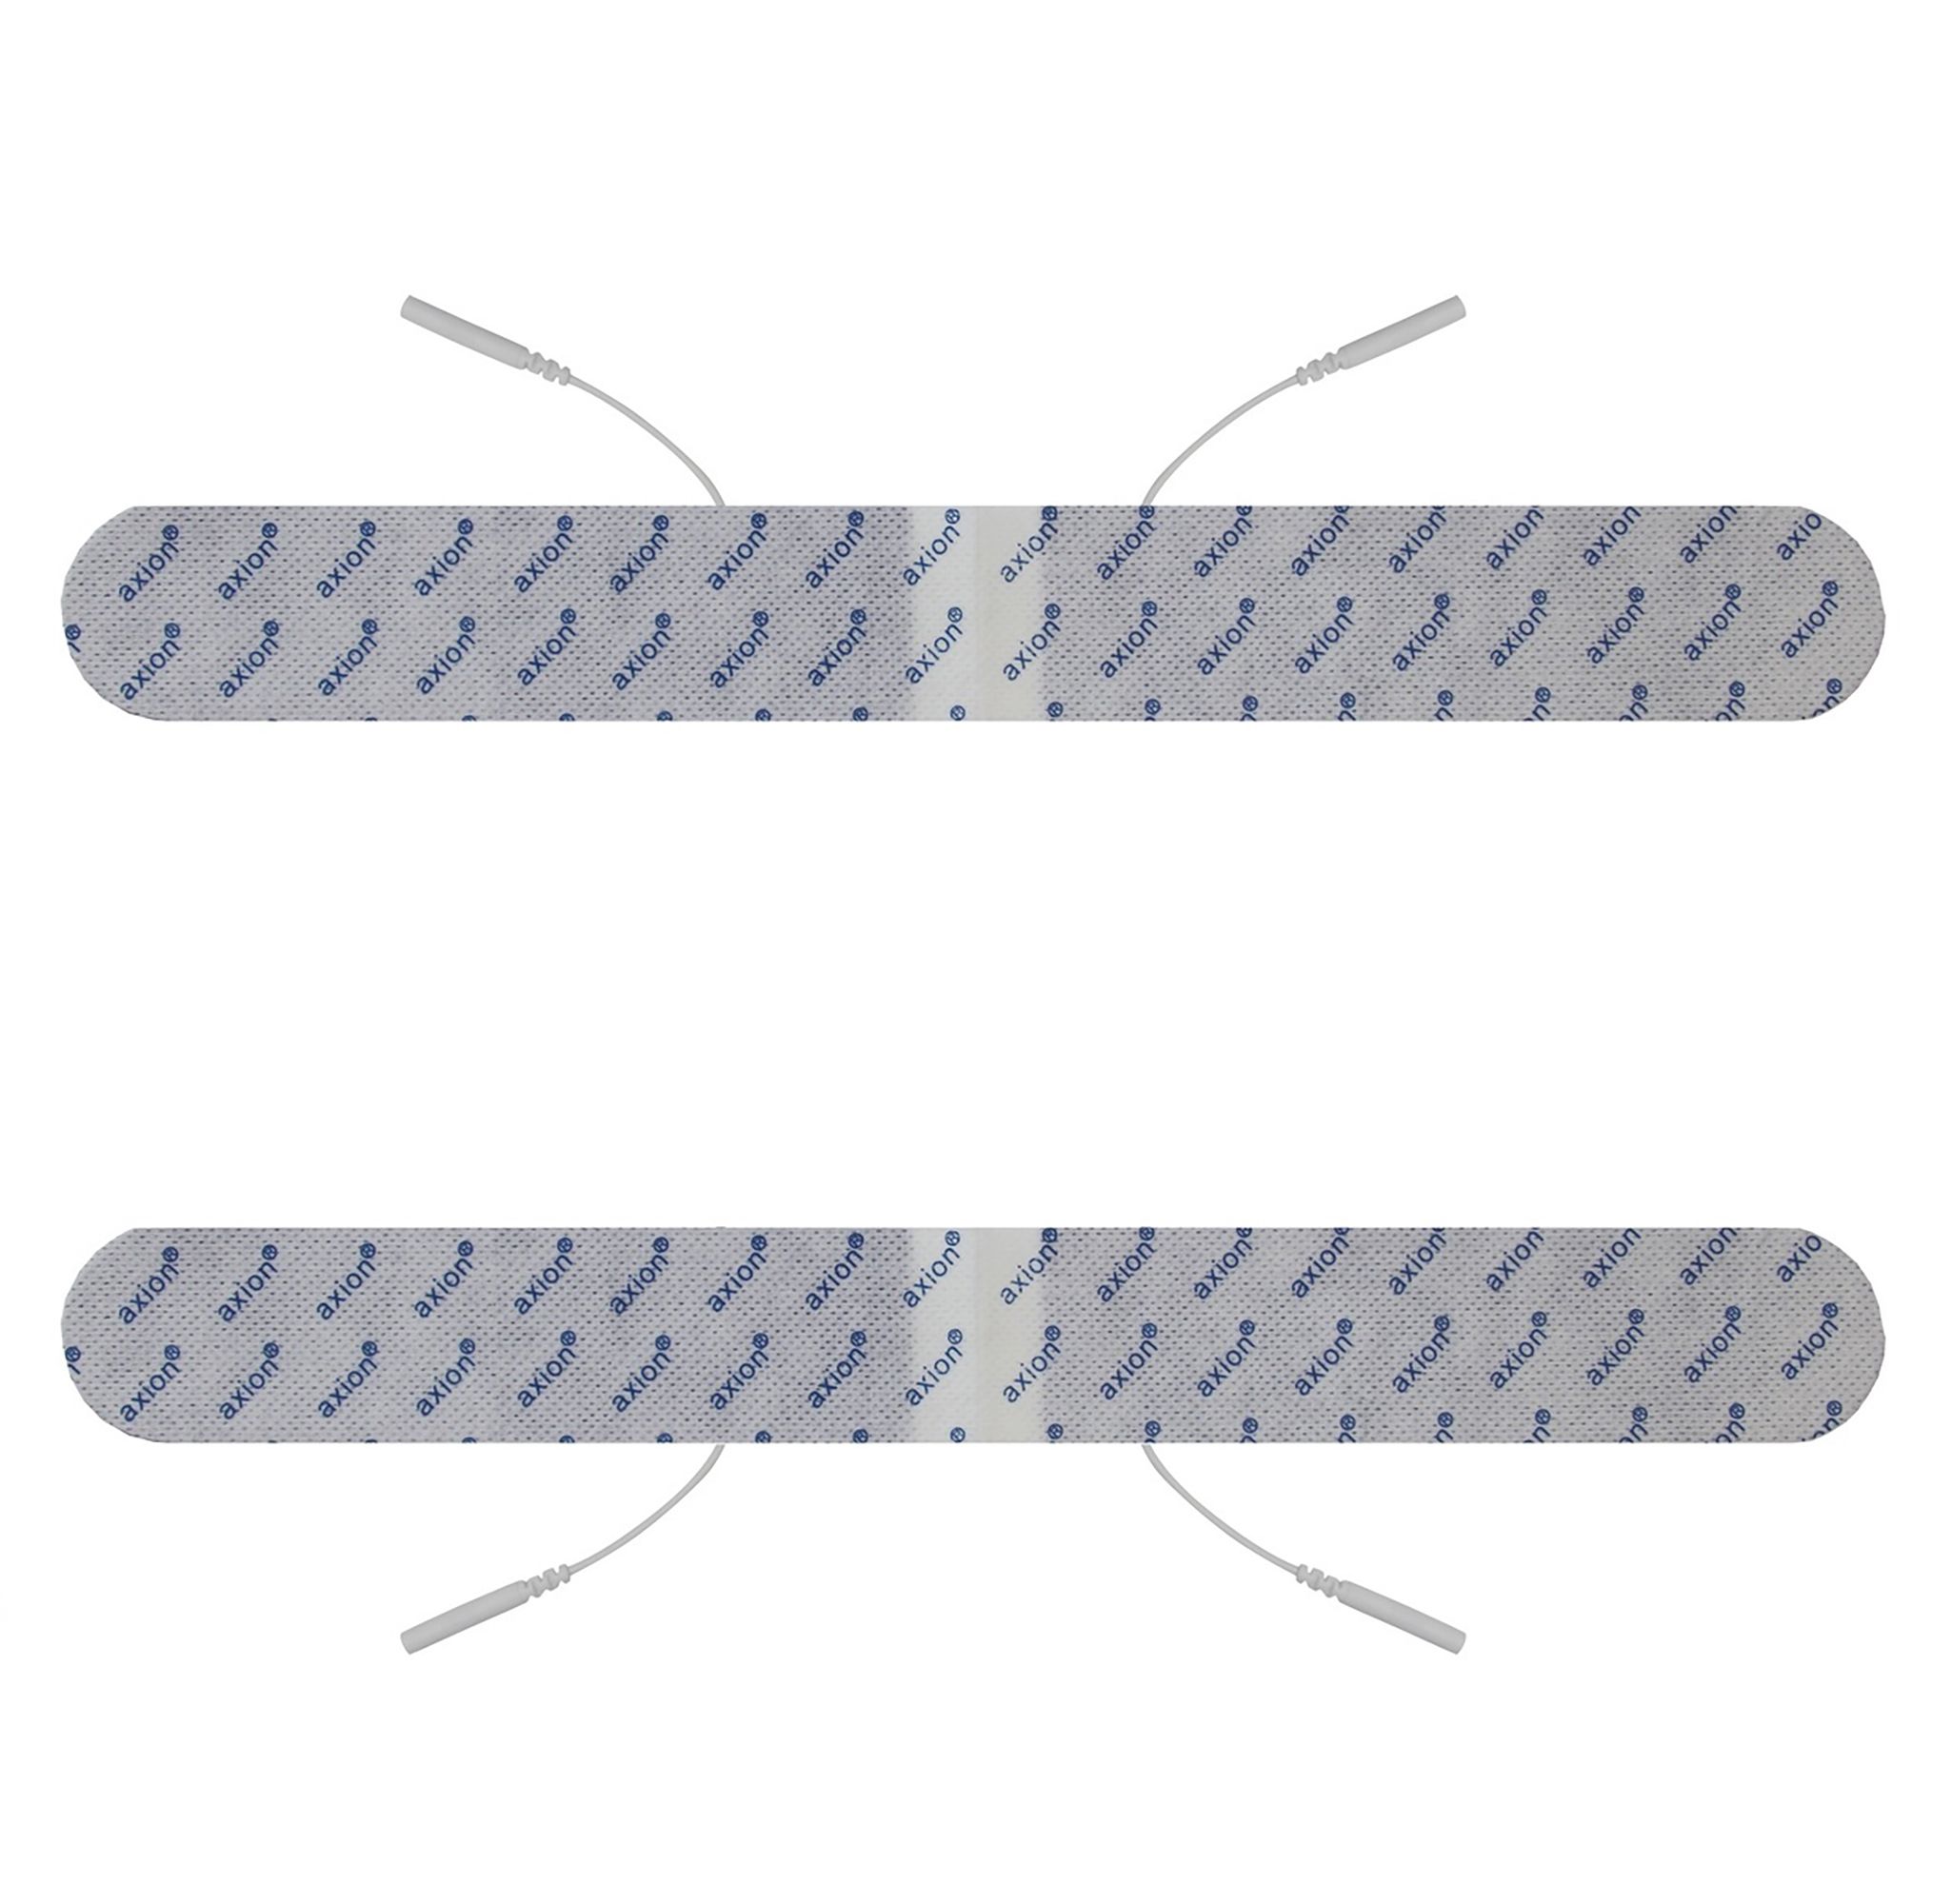 axion selbstklebende Rücken-Elektroden – passend zu axion, Prorelax, Promed, etc.